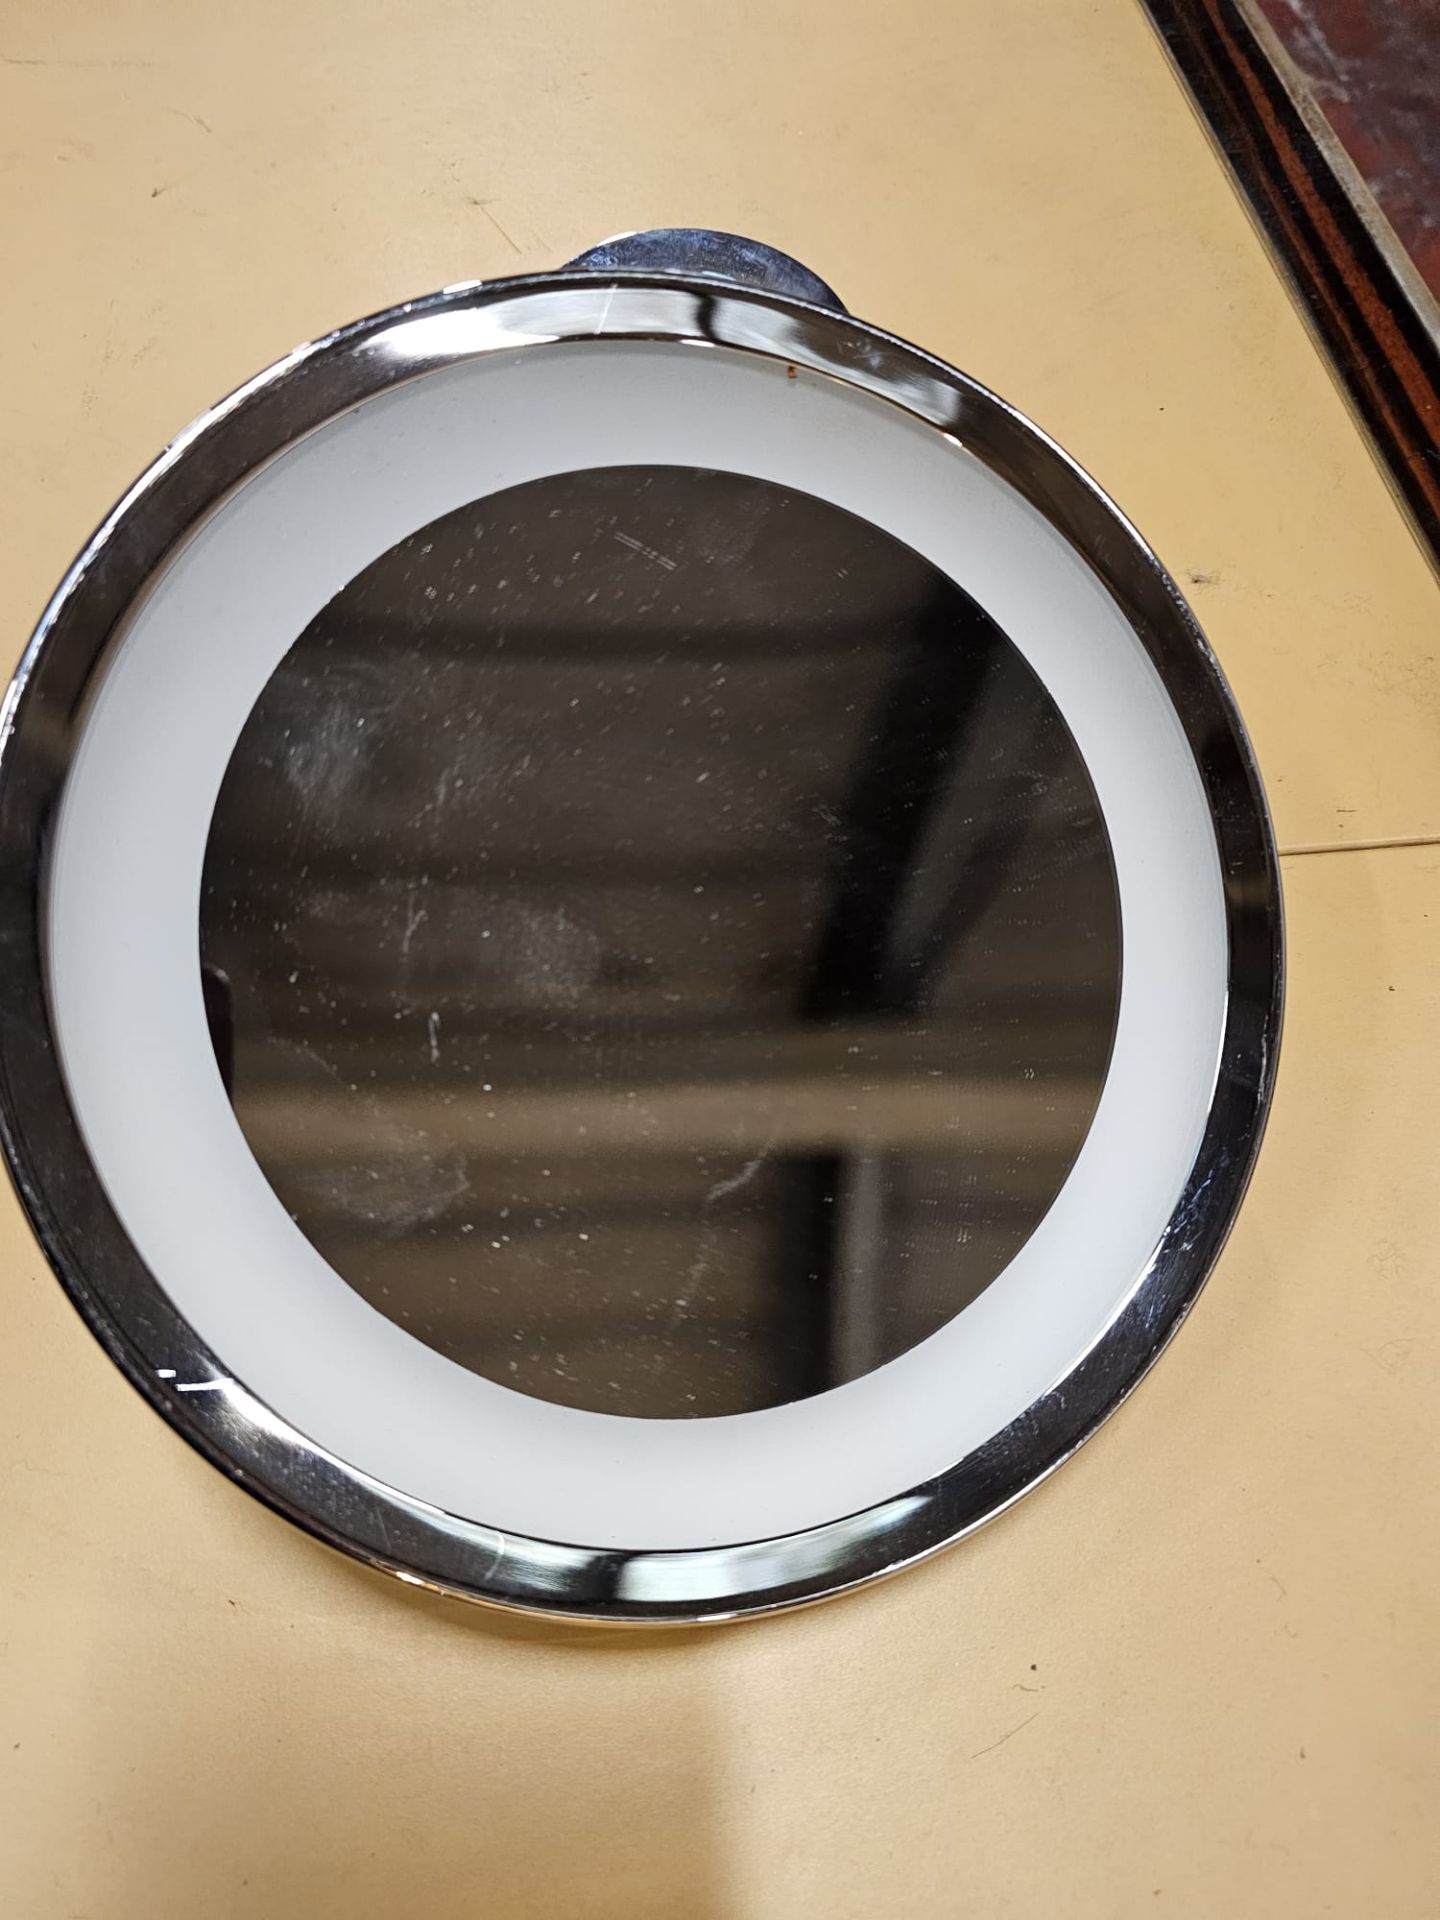 LED Illuminated Magnifying Vanity Mirror For Bathroom Round Ingress Protection Rating IP52 - Image 2 of 3